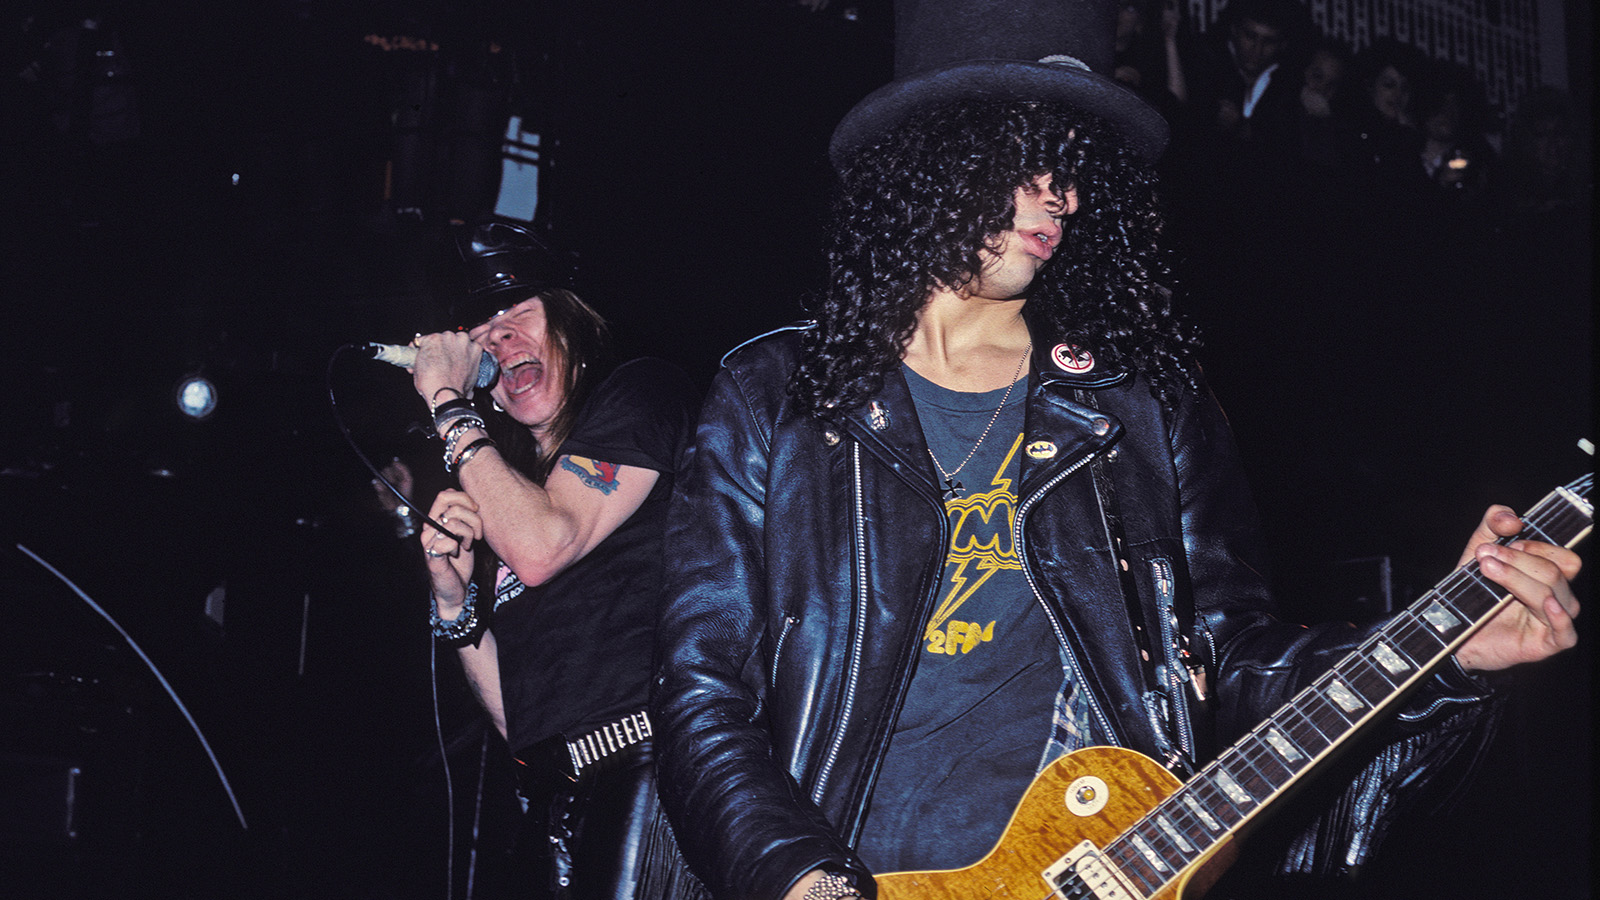 REVIEW: Guns N' Roses – Lies (1988)